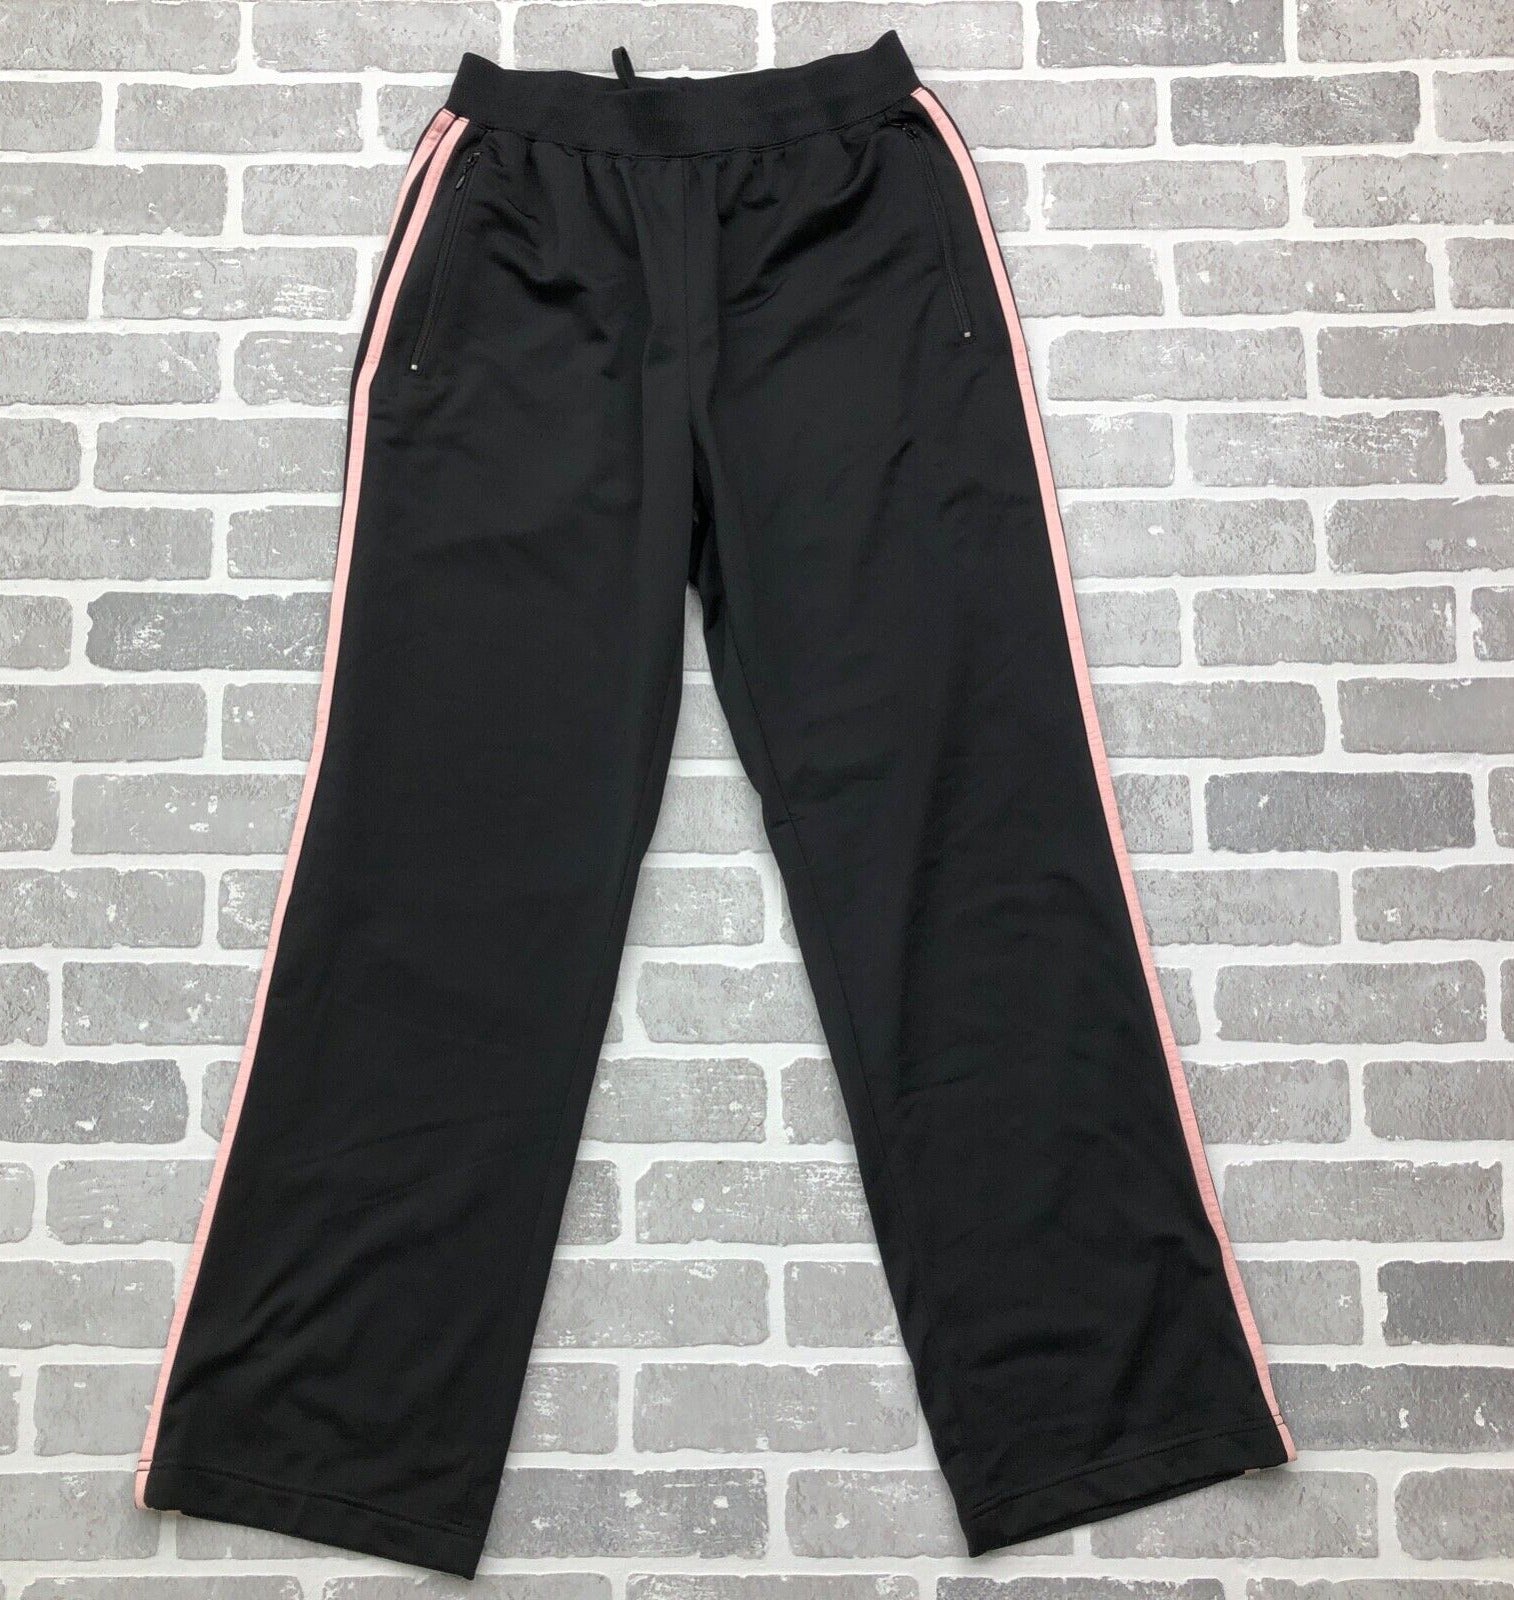 '01 Vintage Adidas Black & Pink 3 Stripe Athletic Track Pants Women's Size L